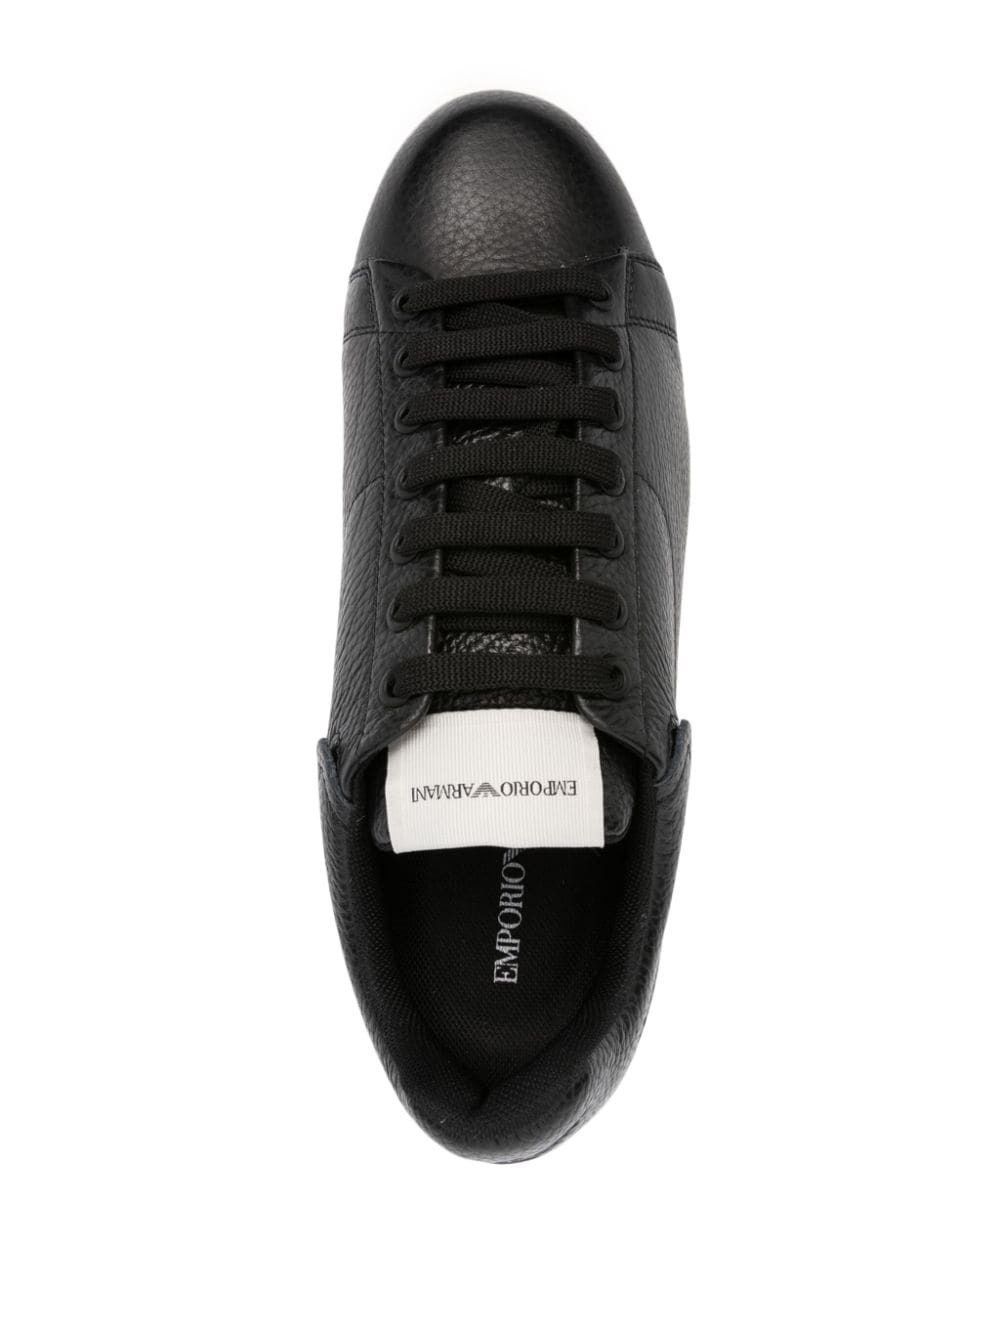 EMPORIO ARMANI - Logo Leather Sneakers